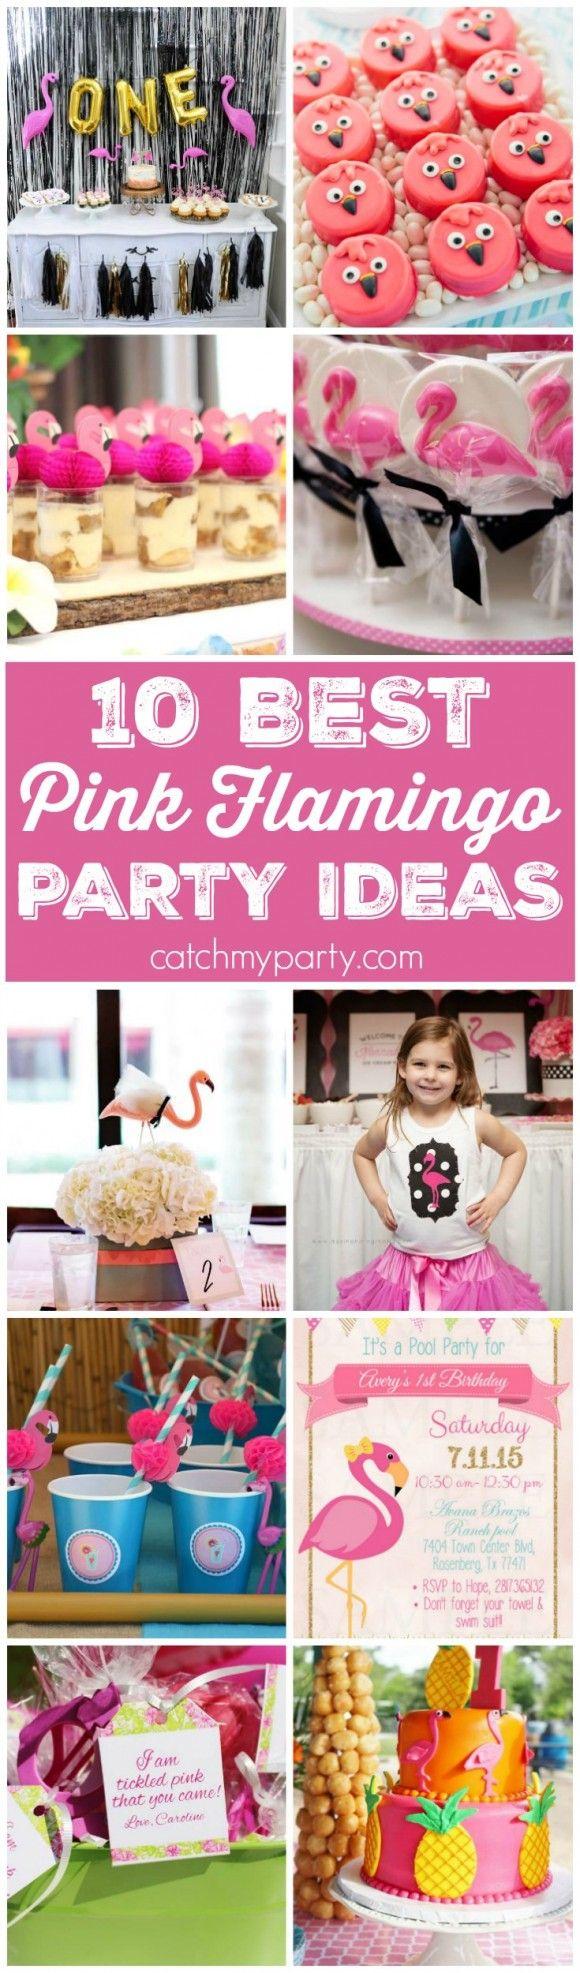 Wedding - 10 Best Pink Flamingo Party Ideas